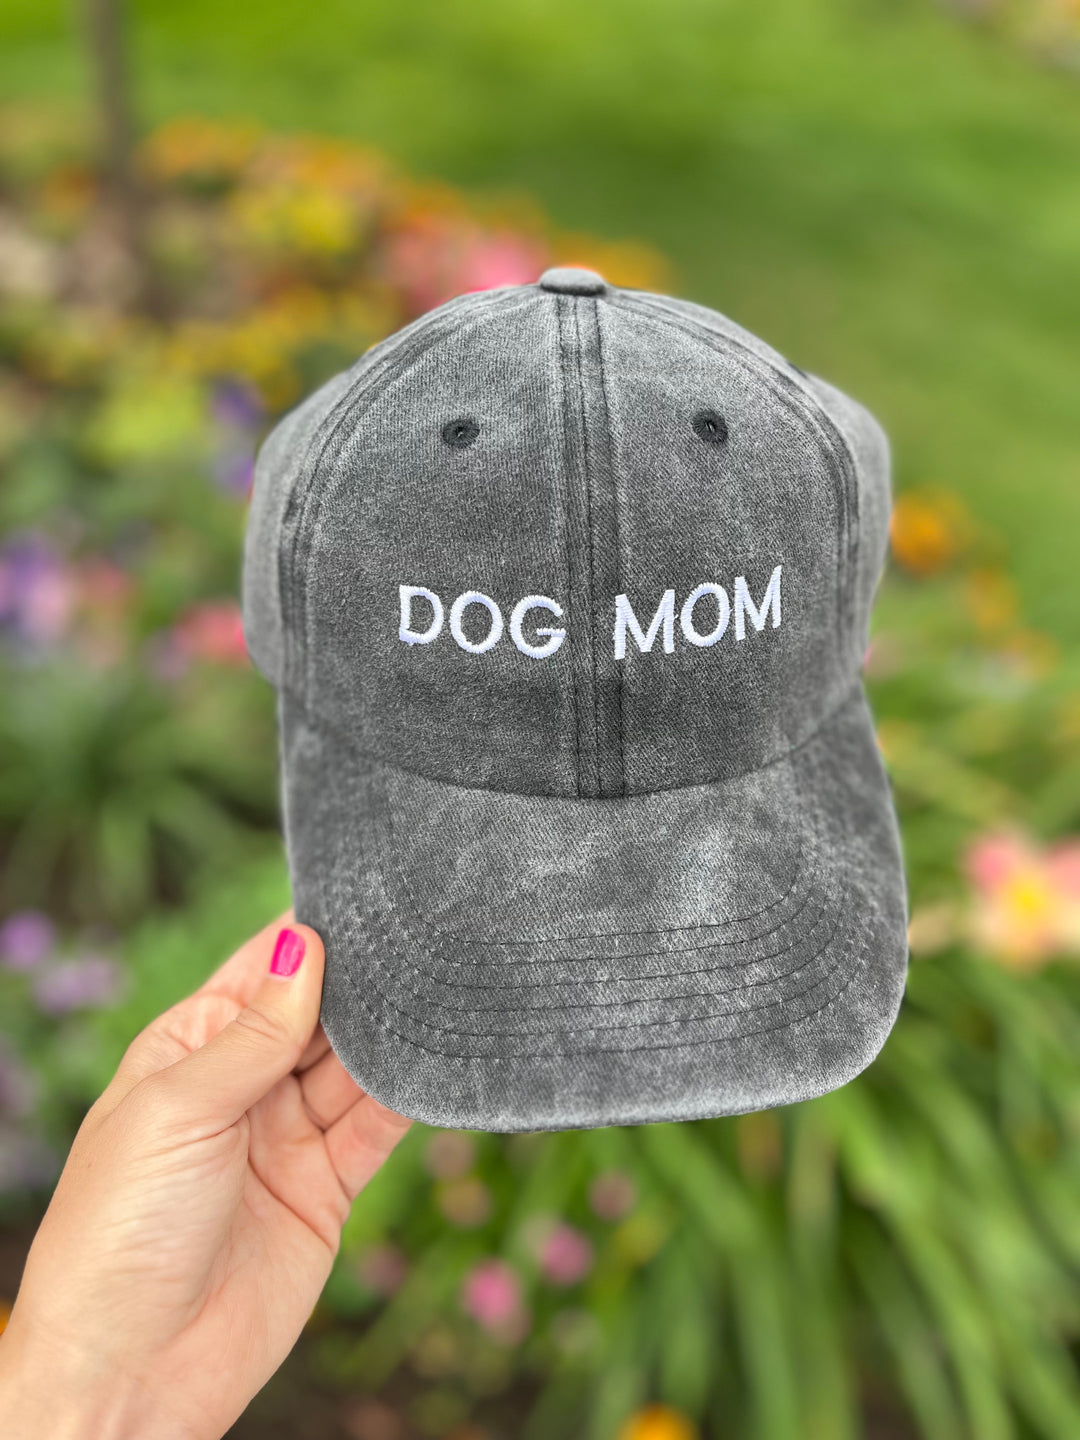 Dog Mom Embroidered Black Baseball Hat